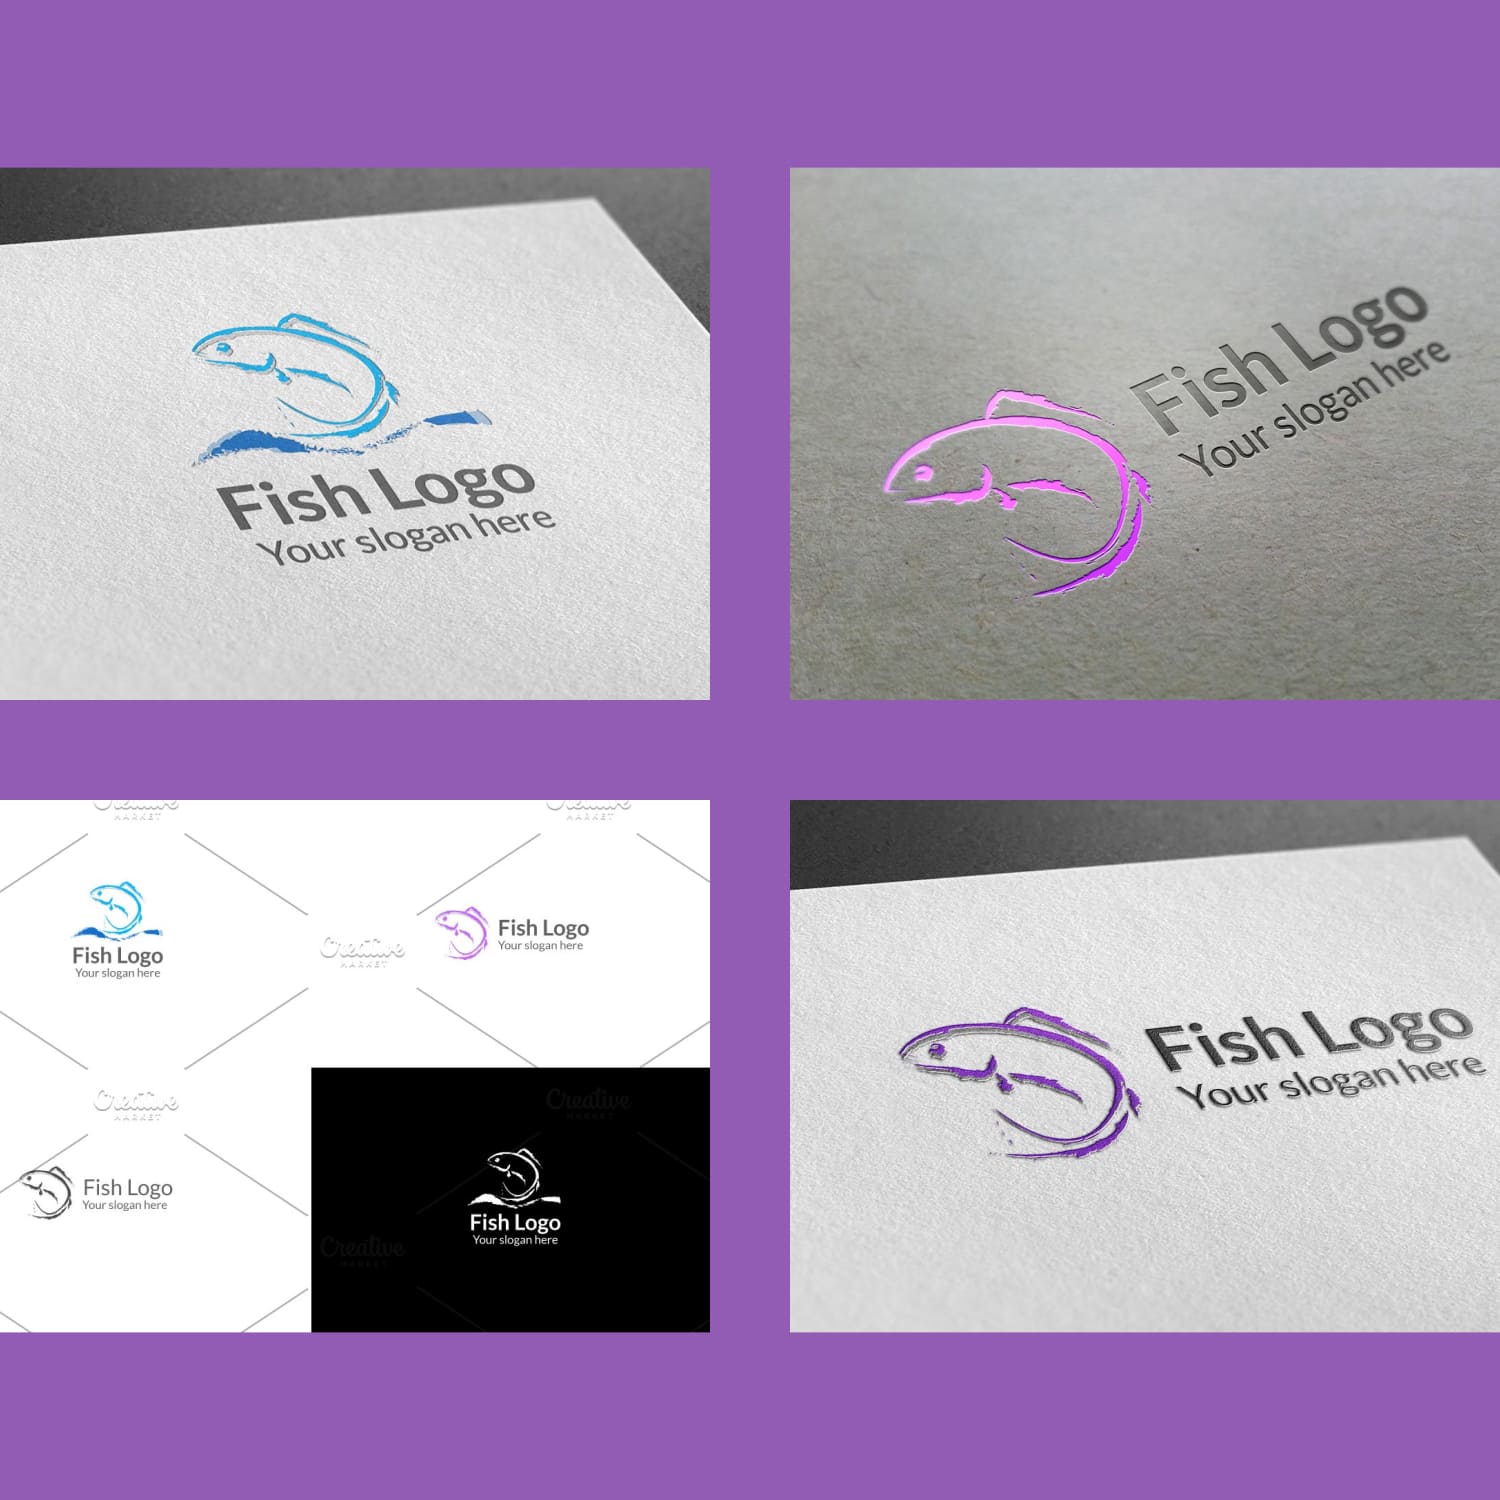 Fish Logo cover.